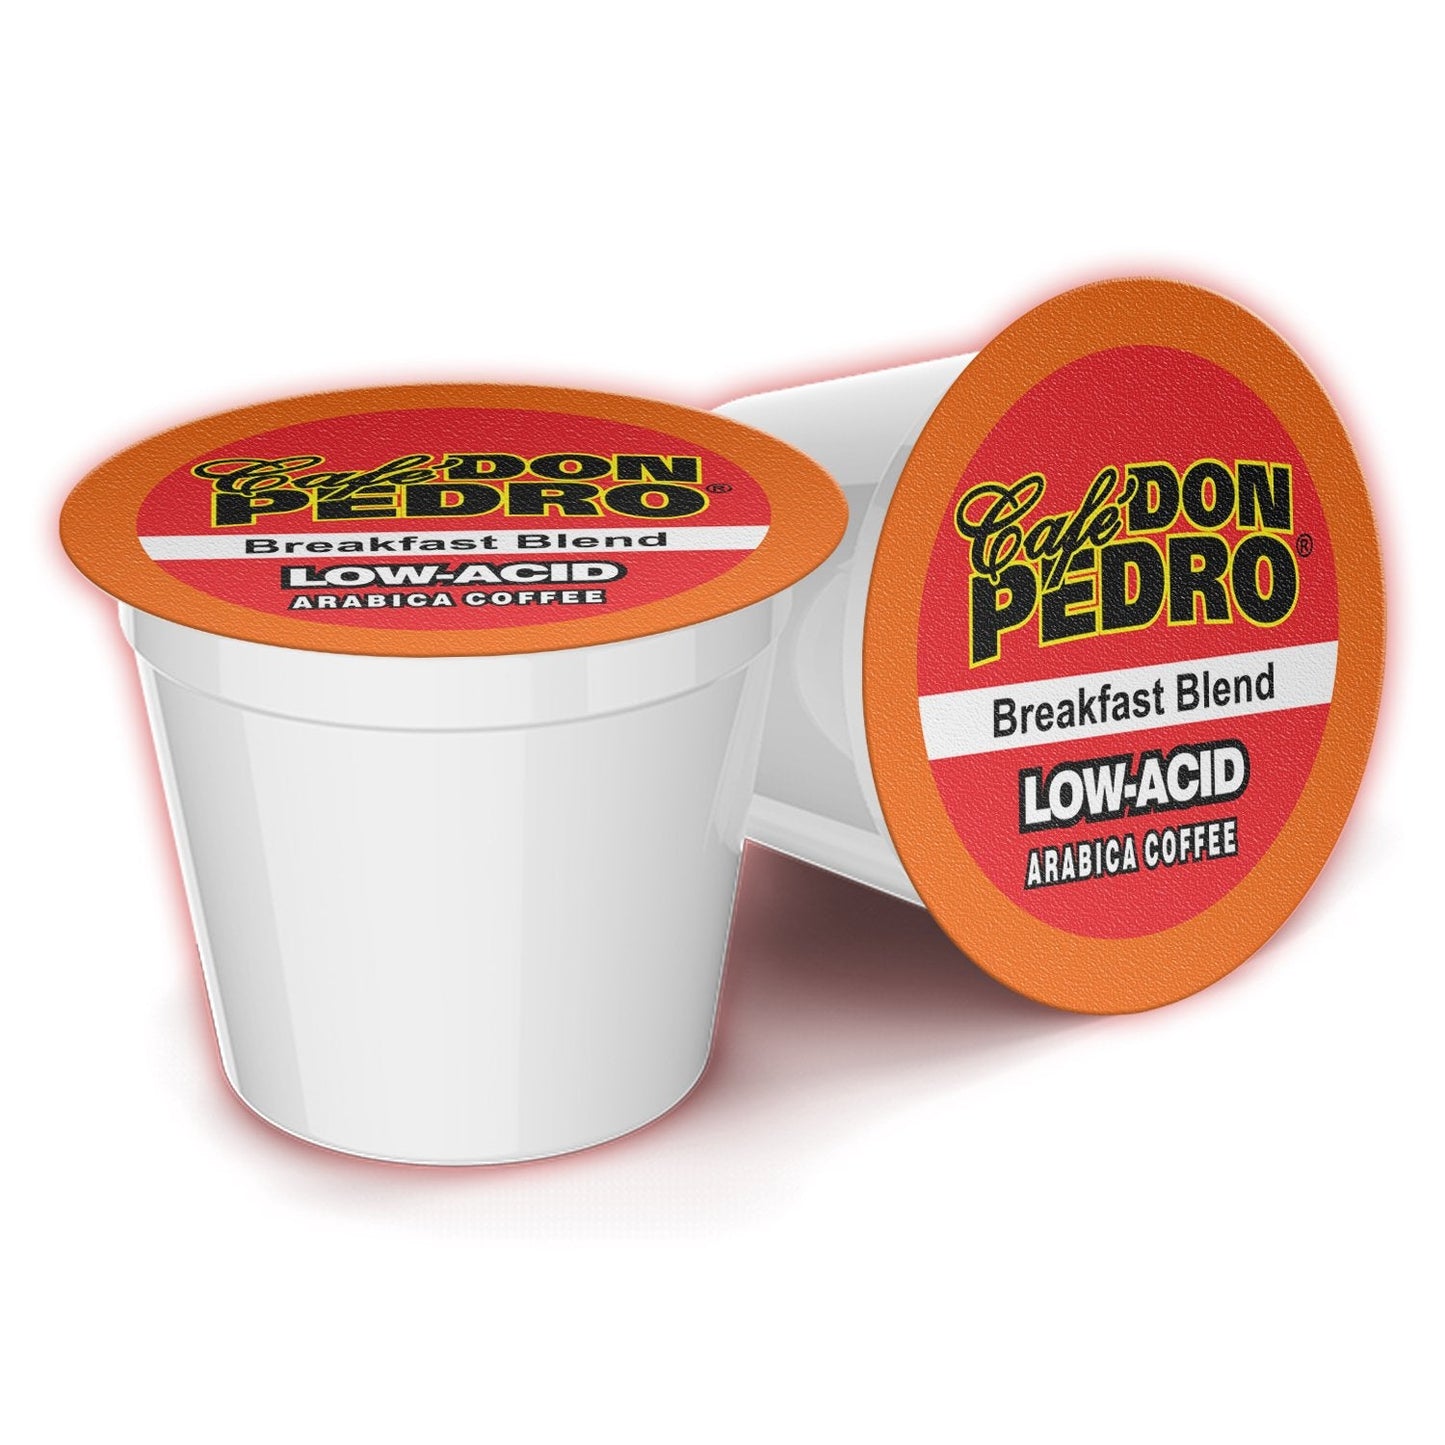 12 ct. Box Cafe Don Pedro Low-Acid Single Serve Coffee Pods, For Keurig K-cup maker